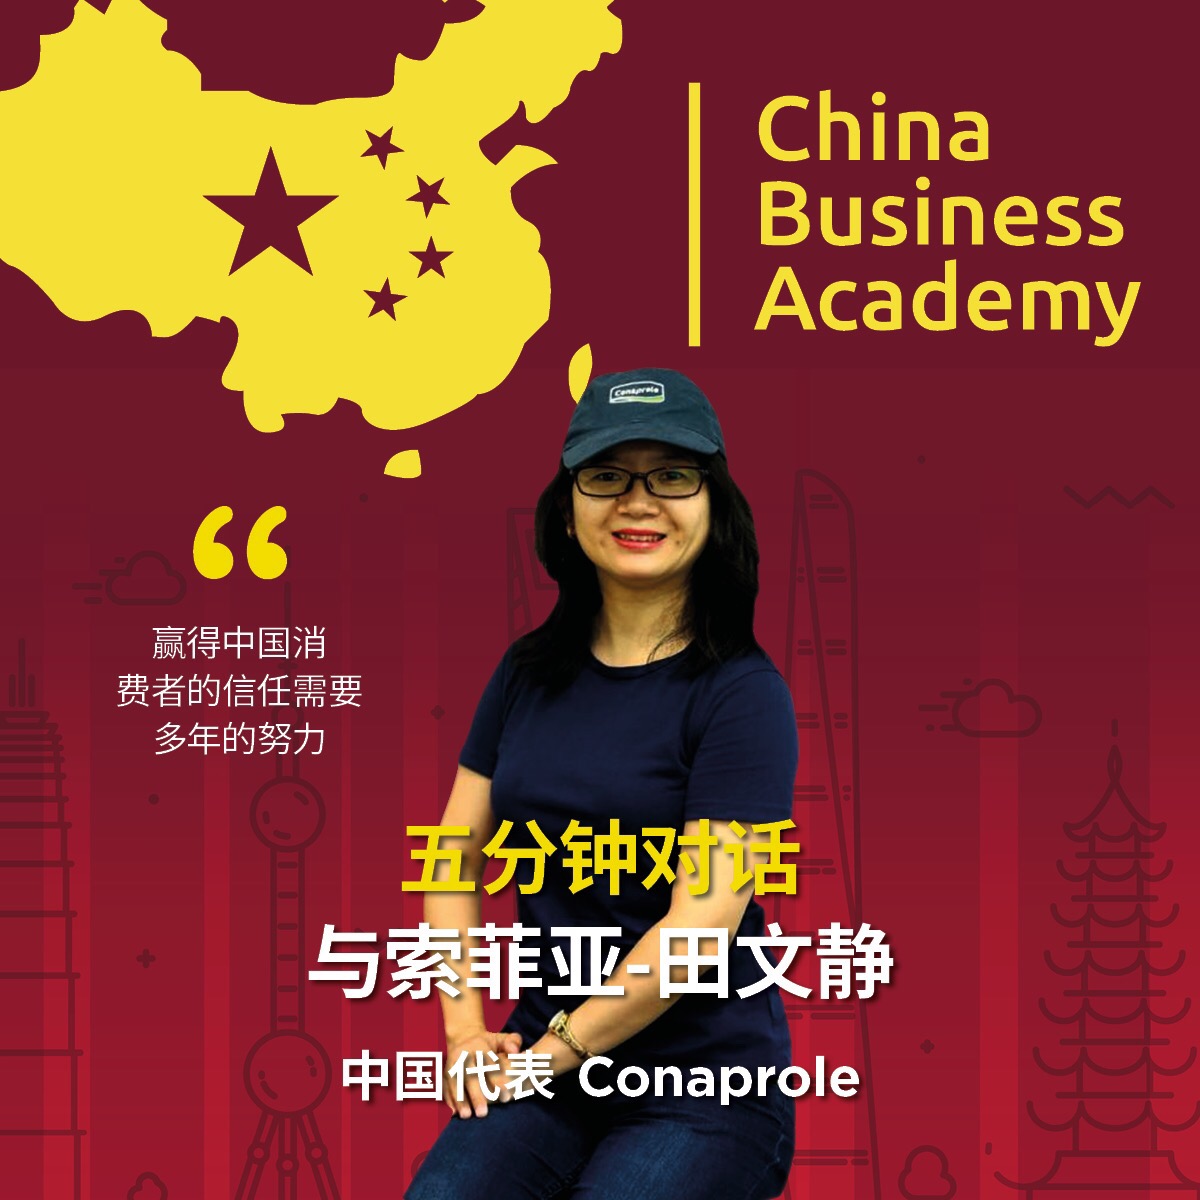 China Business Academy, Entrevista a Sofia Wenjing Tian, nuestra Representante en China